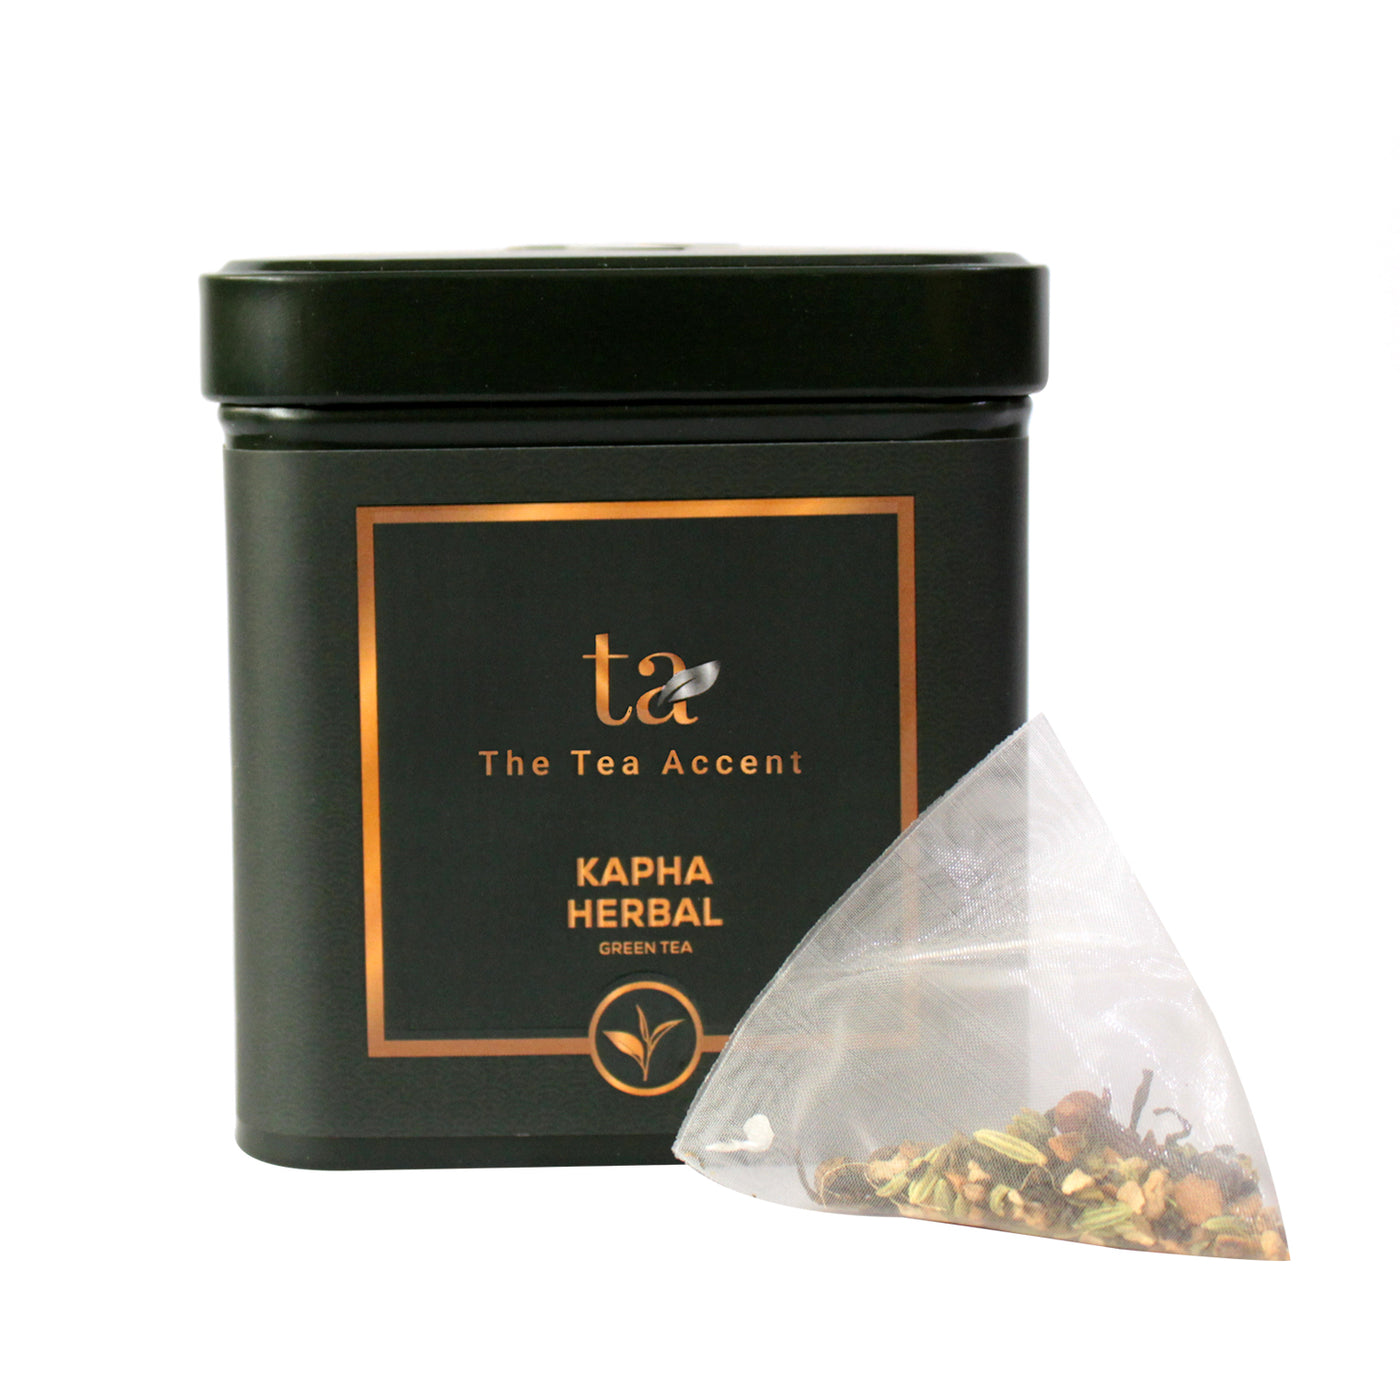 Kapha Herbal Tea